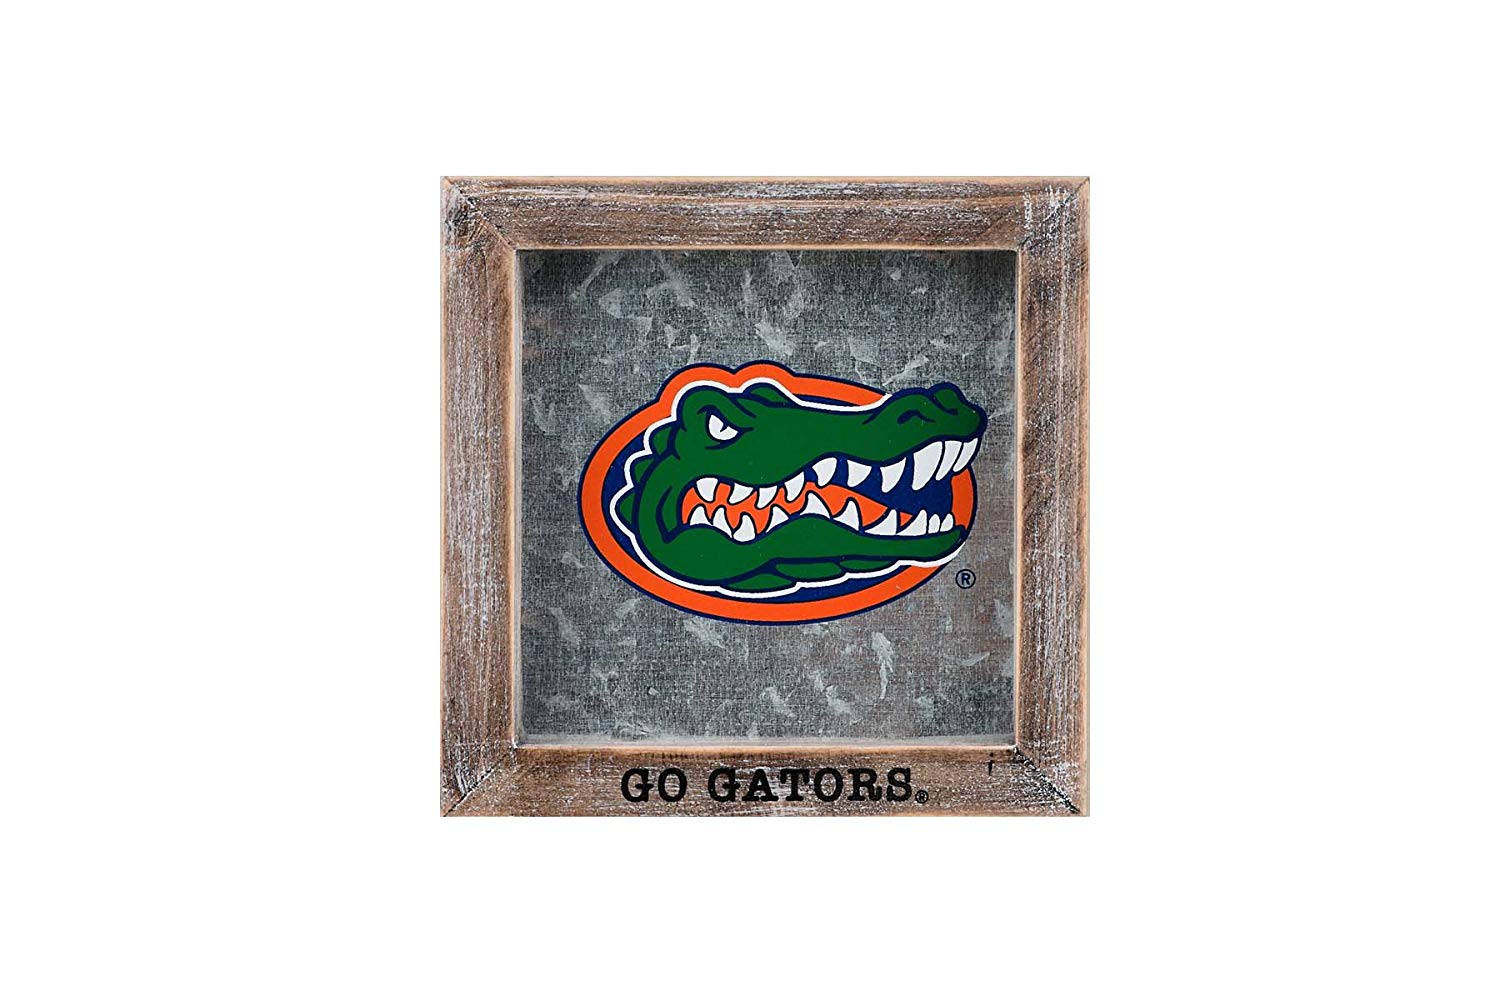 Go Gators Logo - Amazon.com: Glory Haus University of Florida Go Gators Logo Table ...